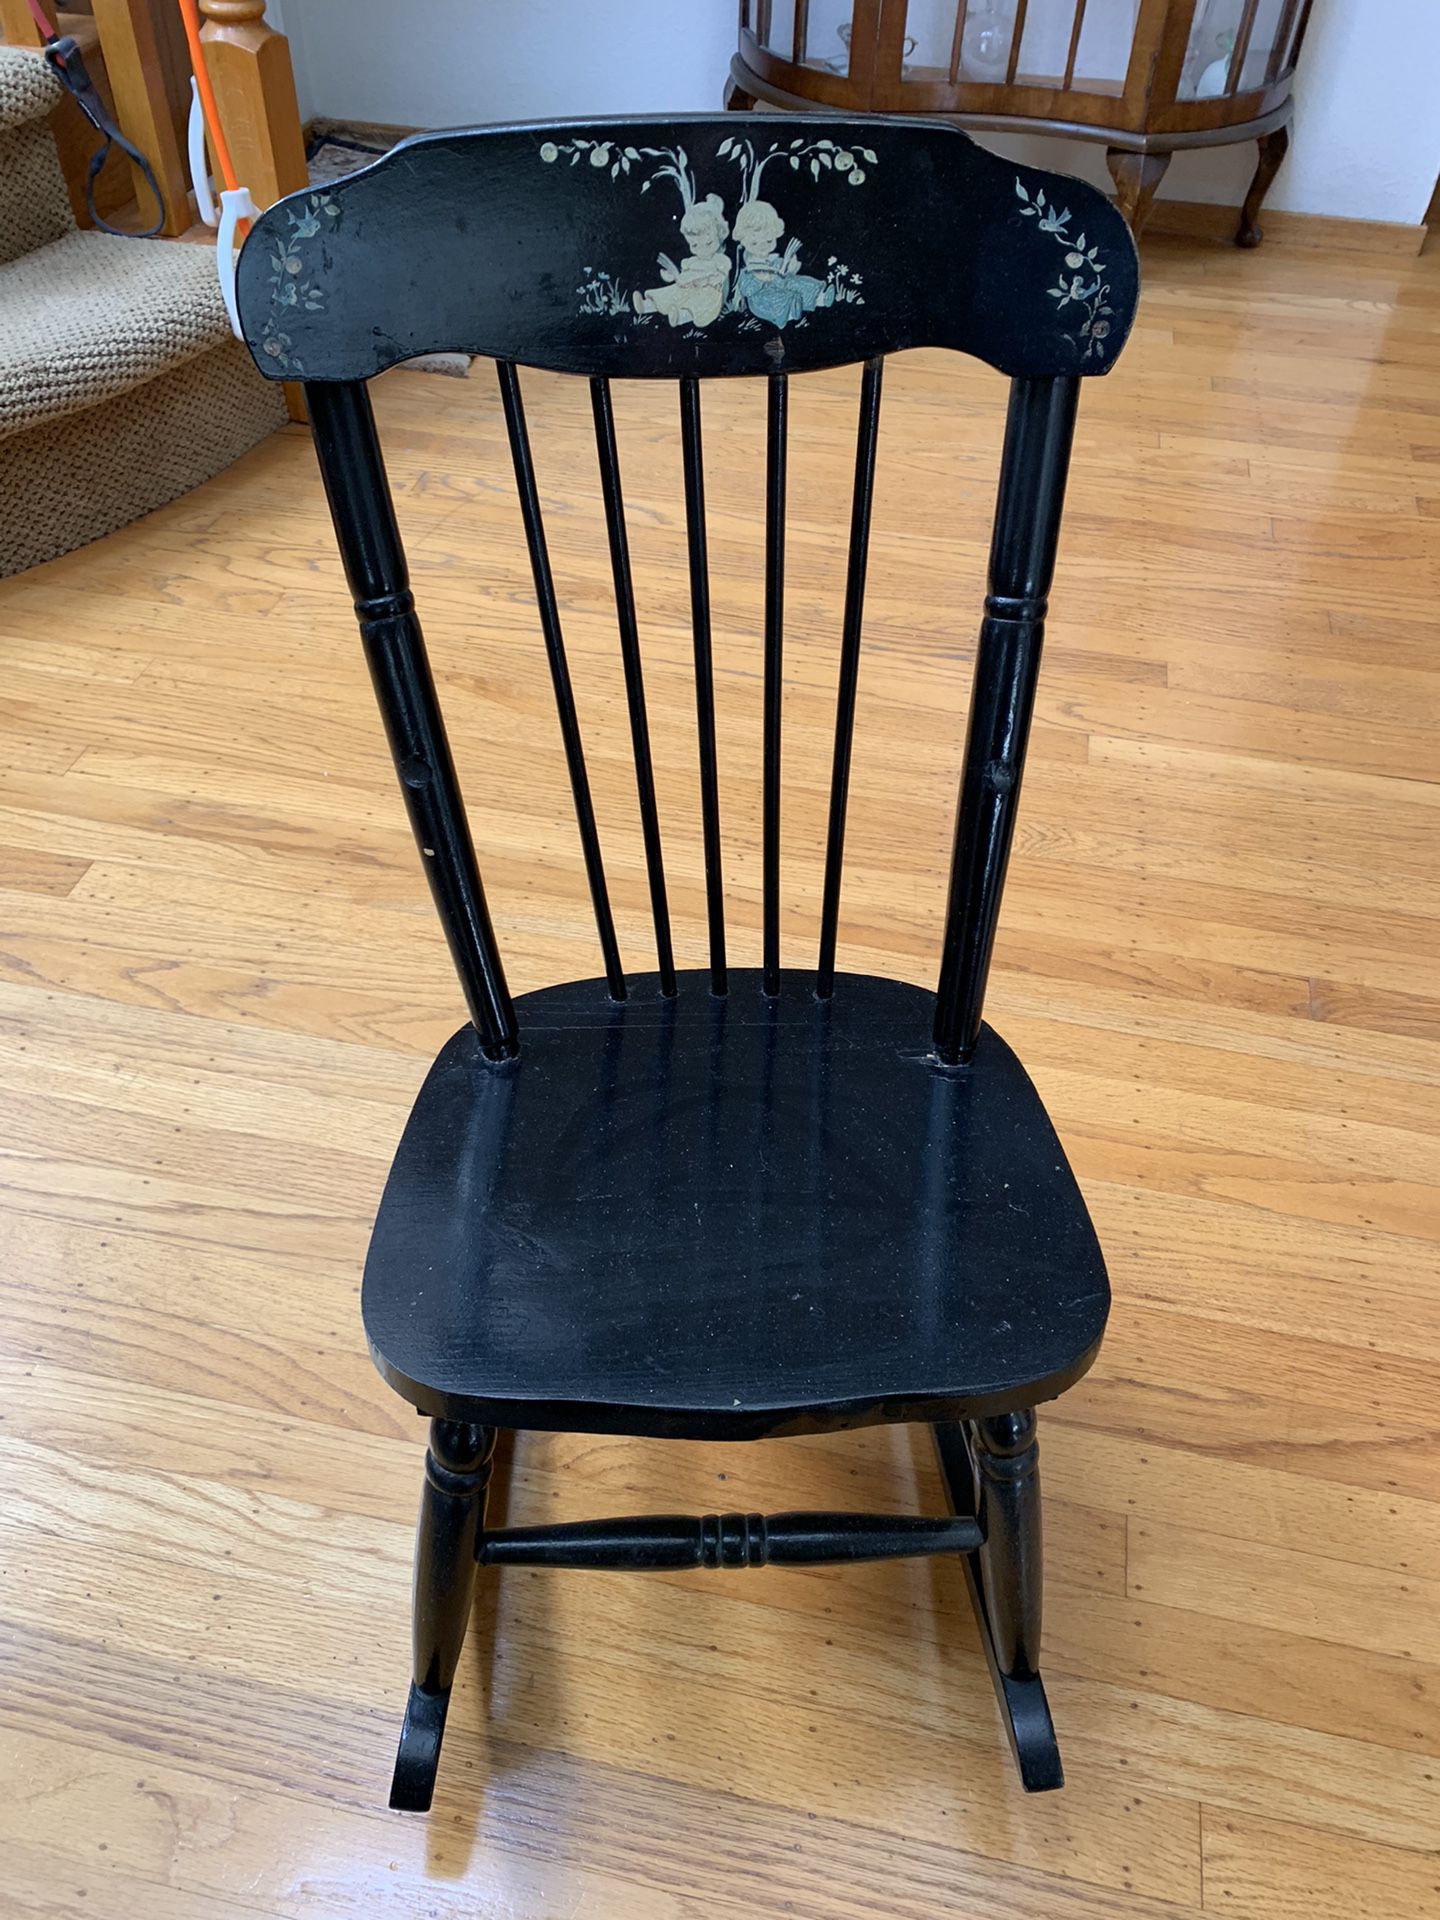 Antique Vintage Child’s Black Wooden Musical Rocking Chair